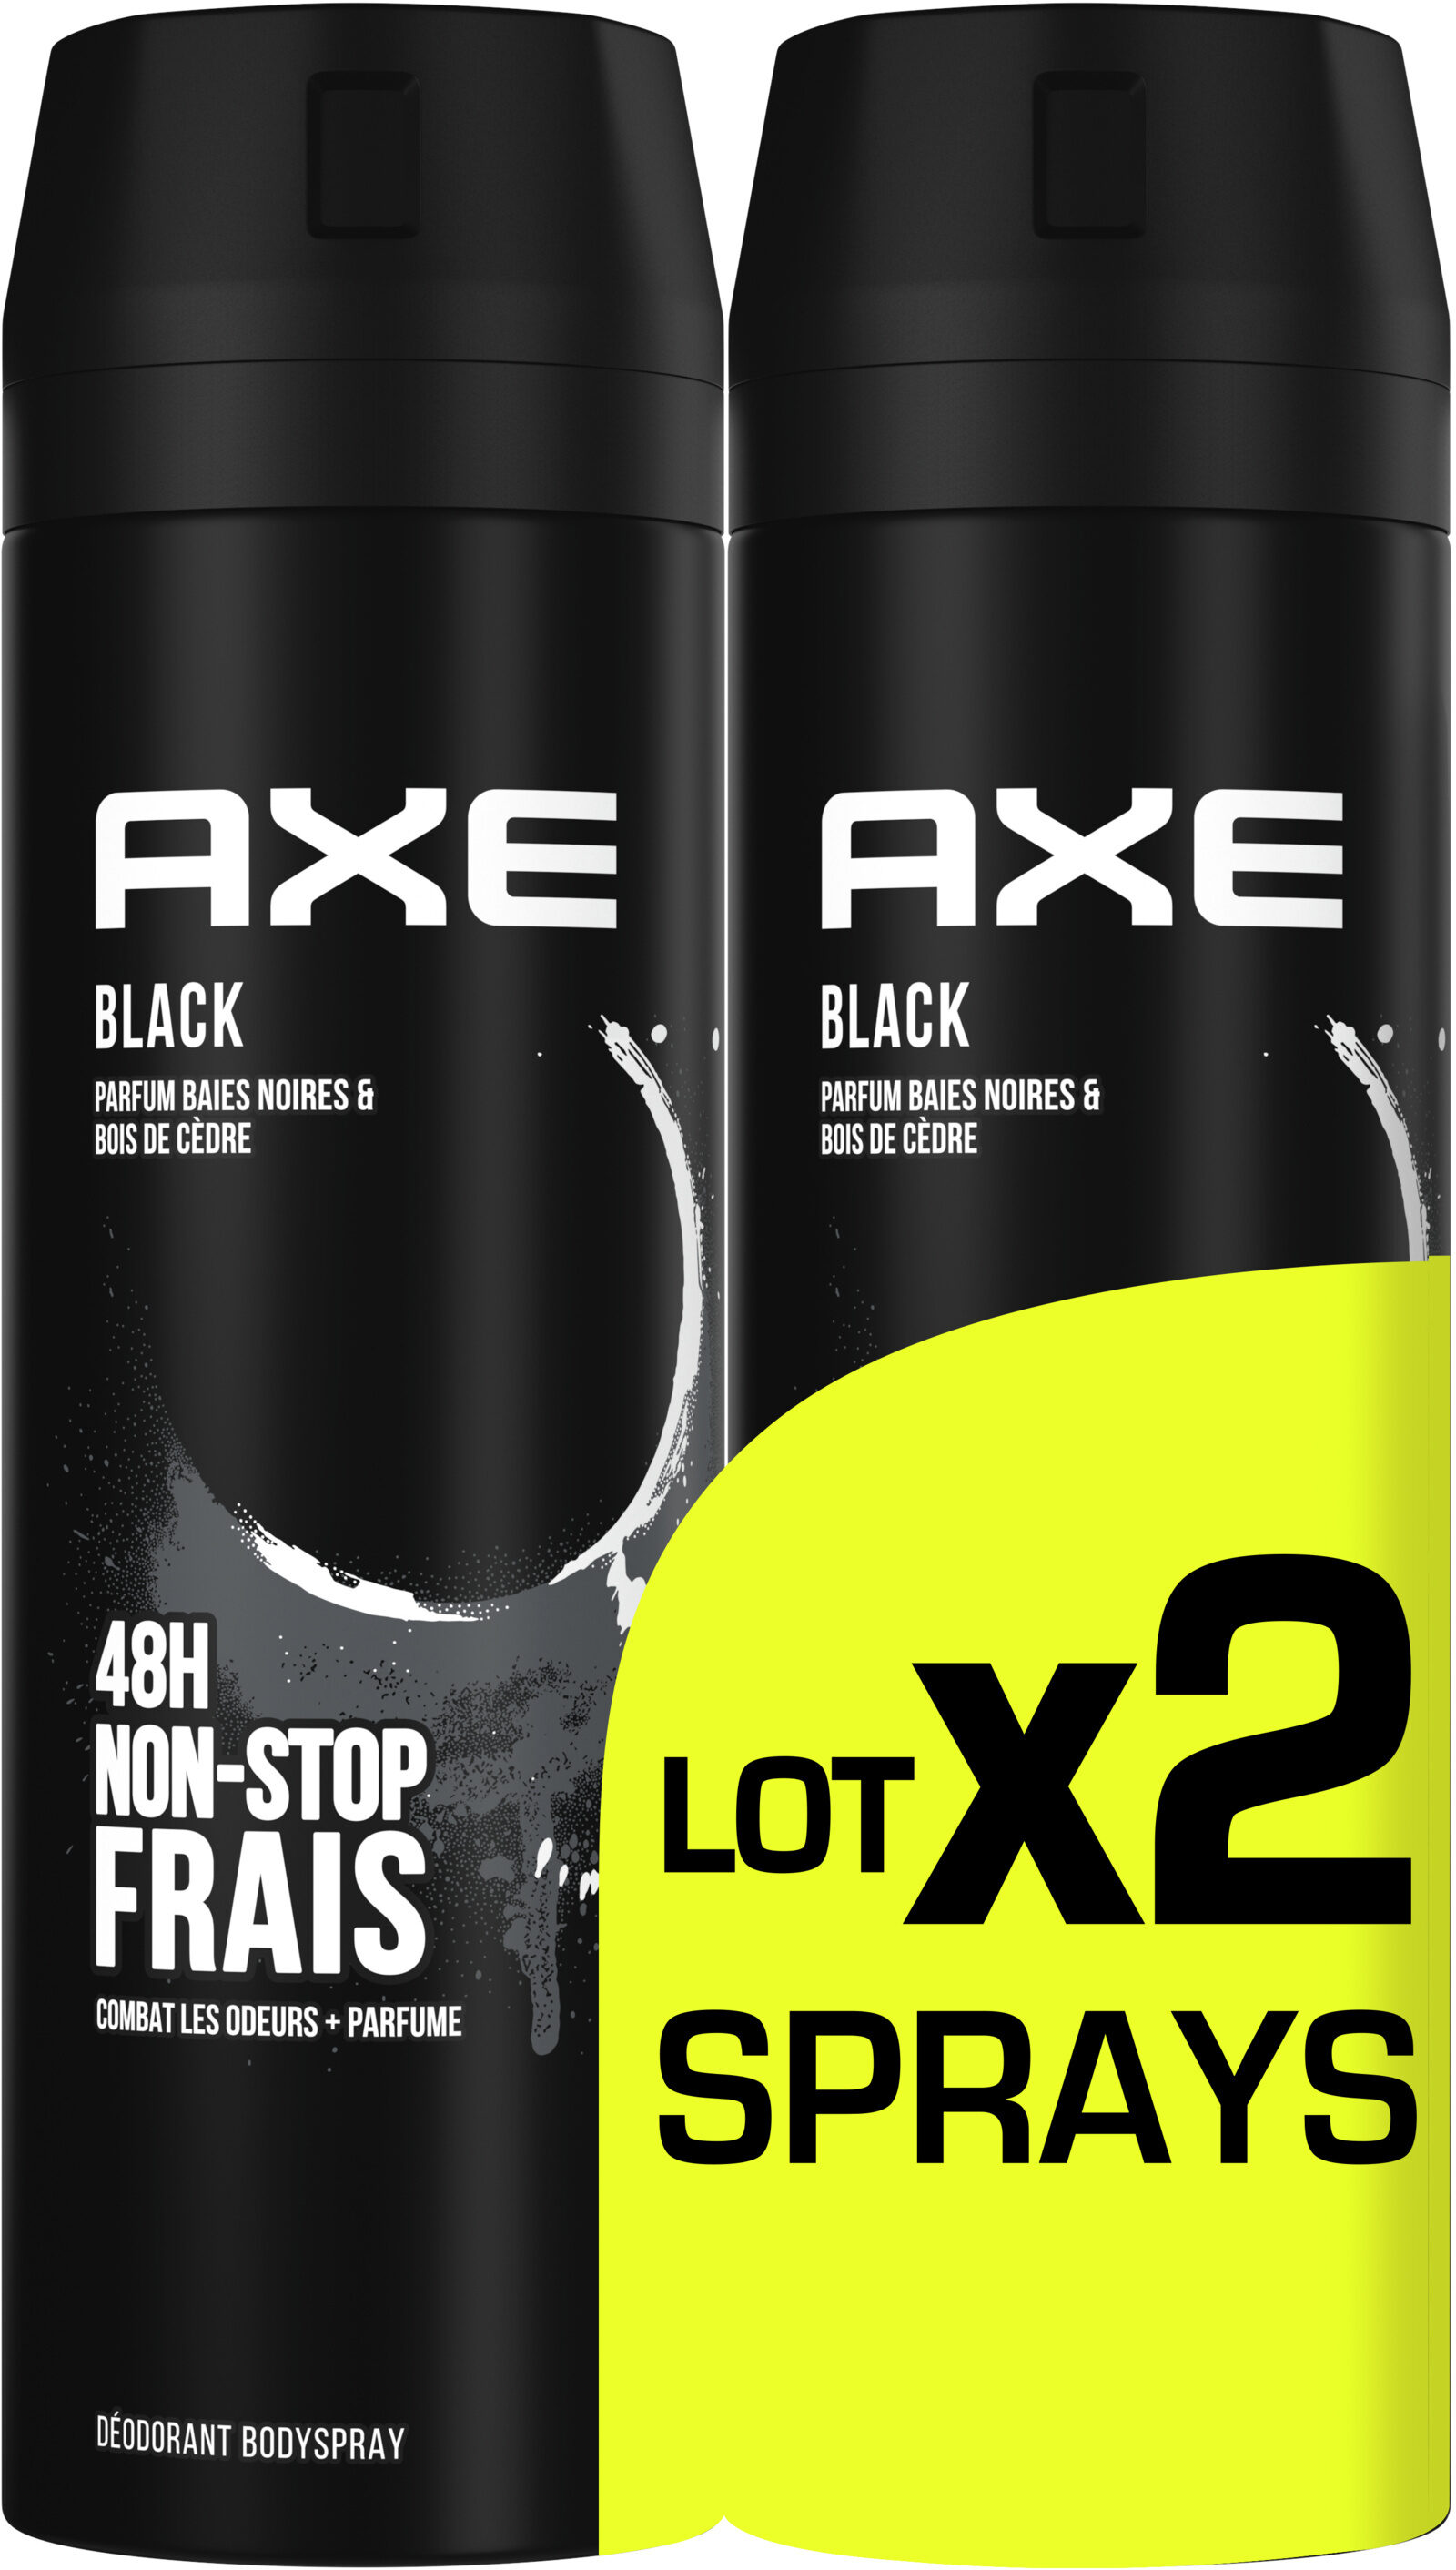 AXE Déodorant Bodyspray Homme Black 48h Non-Stop Frais Lot2x200ml - Produit - fr